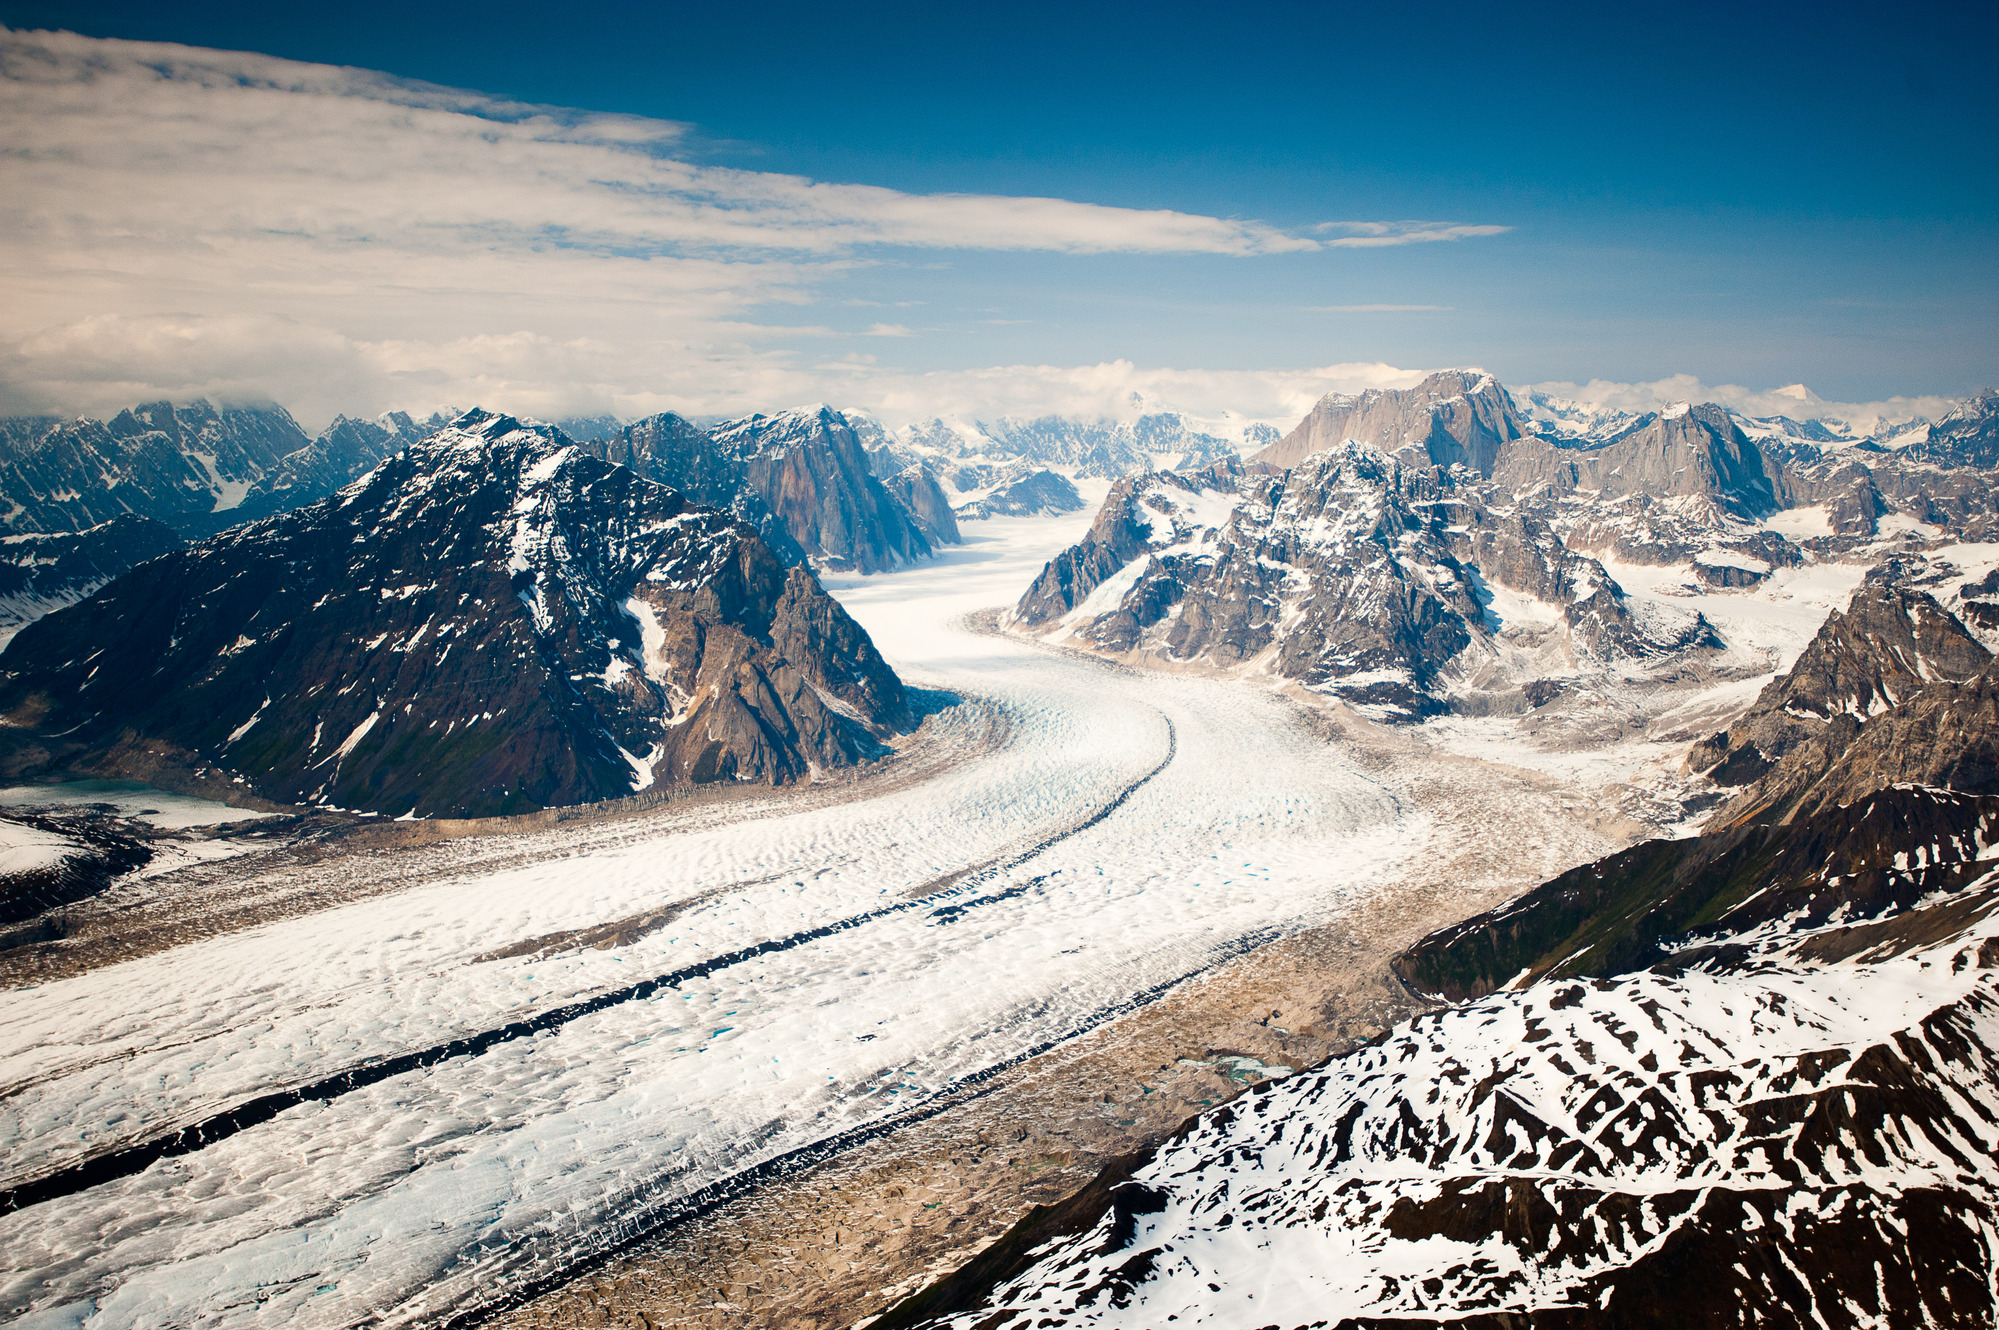 The Alaska Range and Denali: Geology and Orogeny (U.S. National